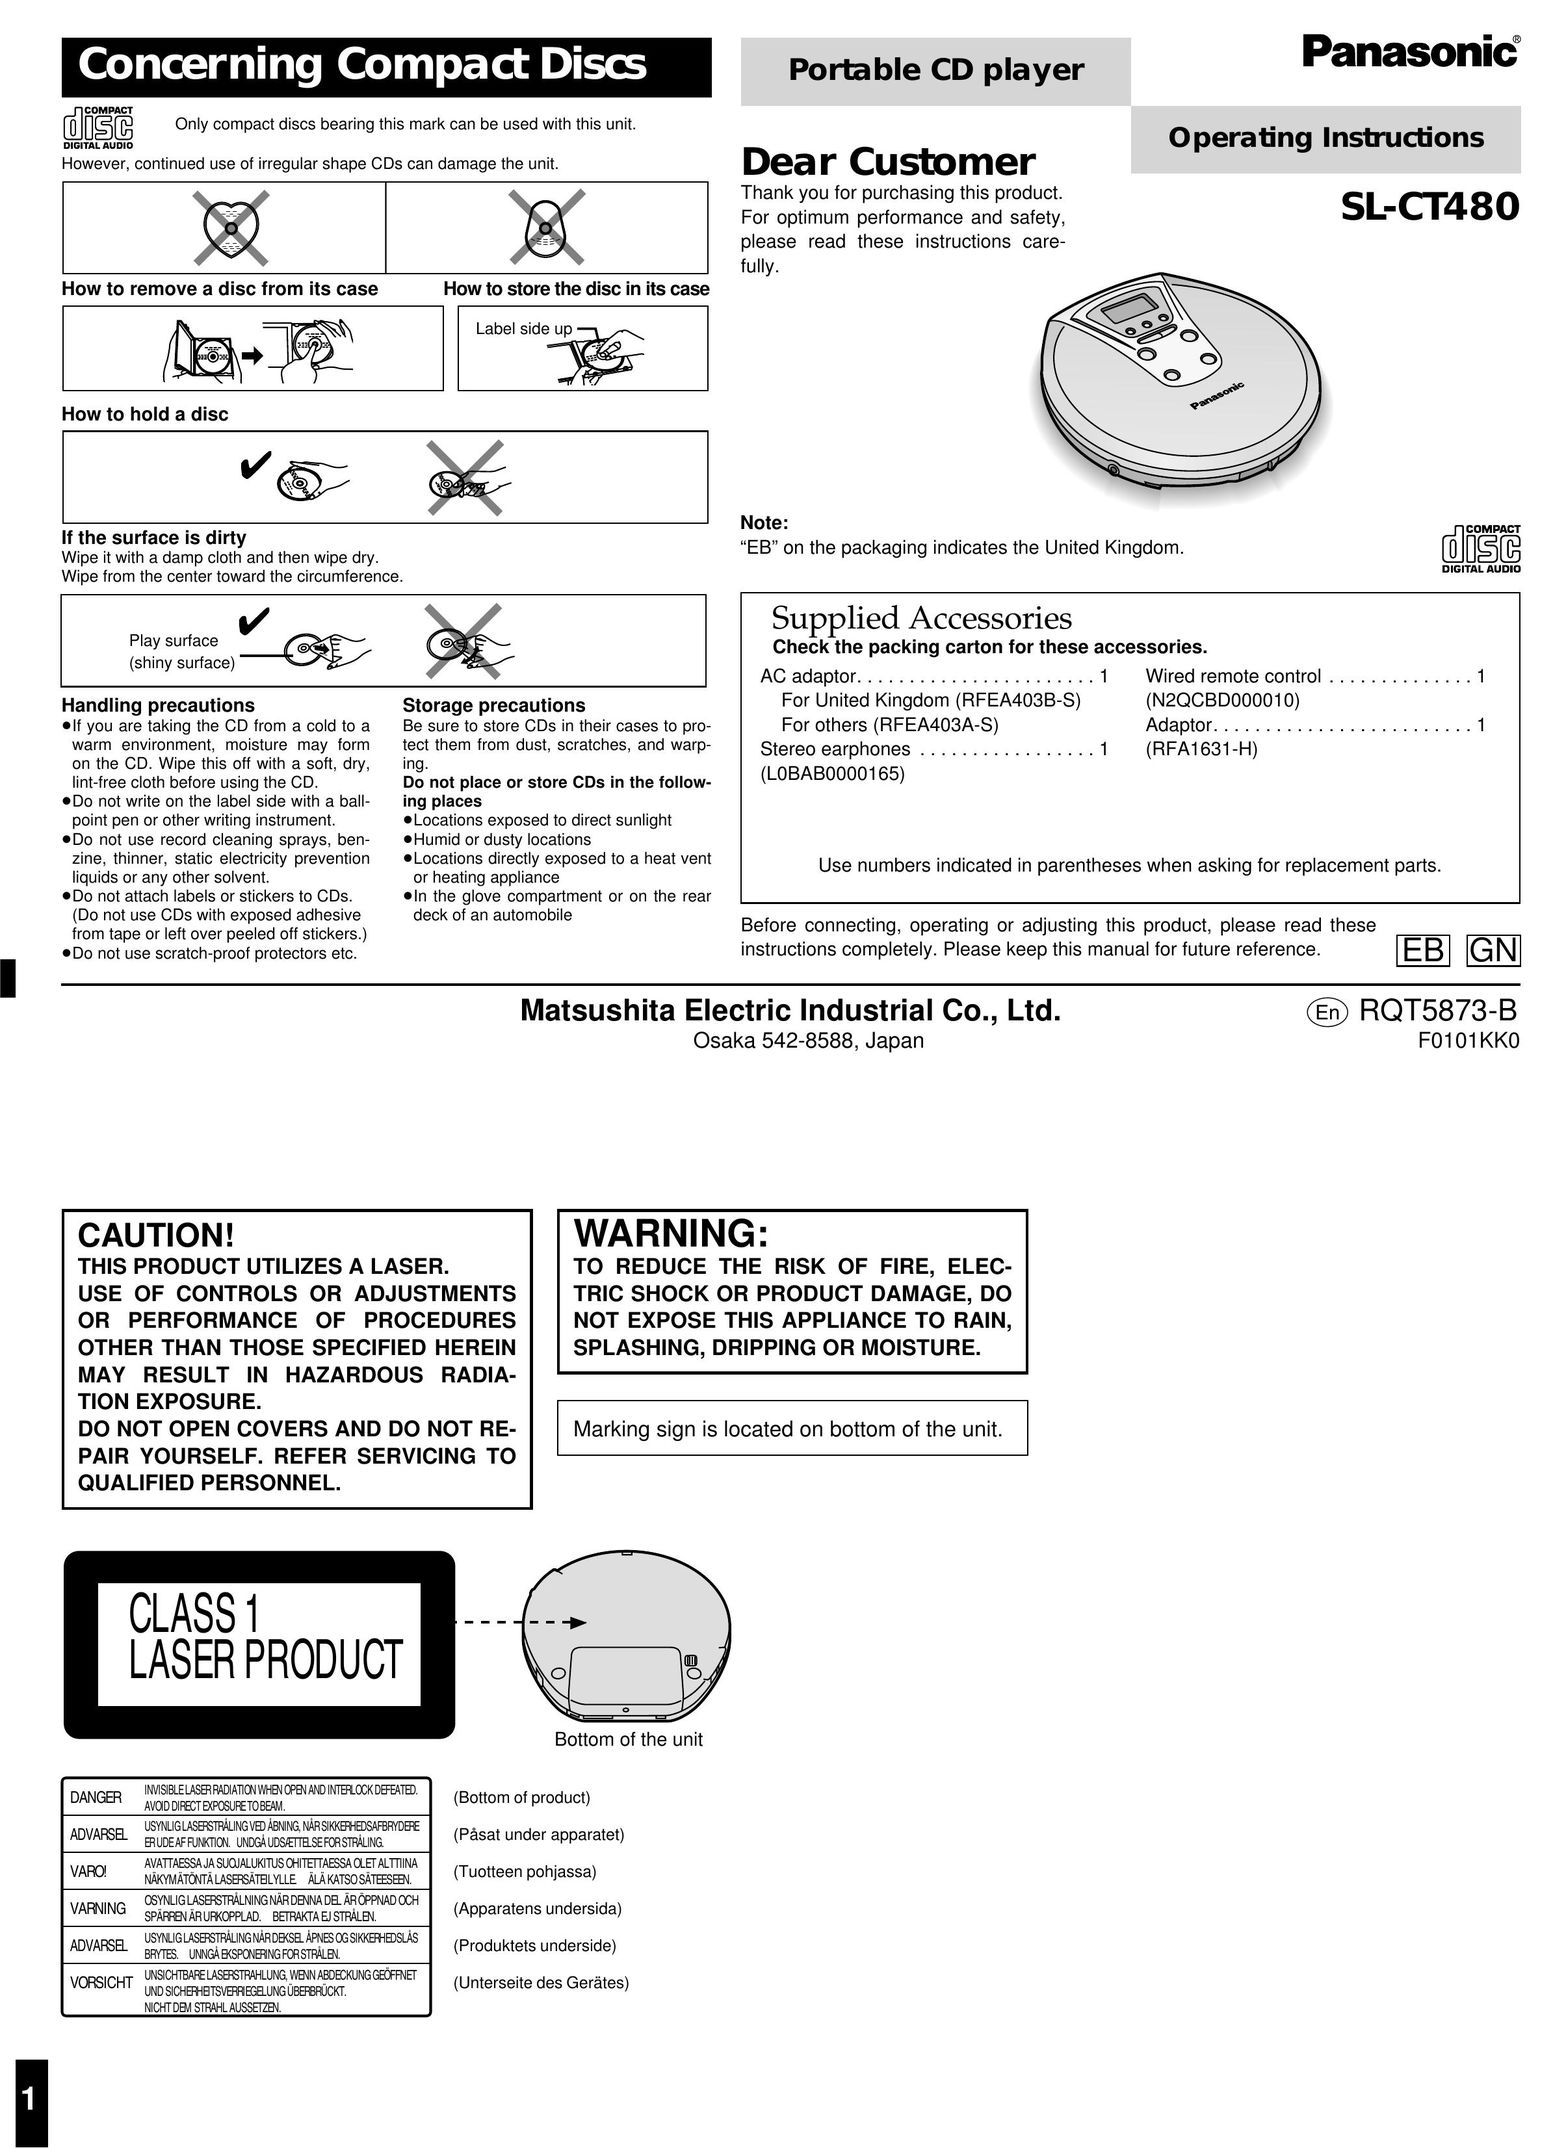 Panasonic SL-CT480 Portable CD Player User Manual